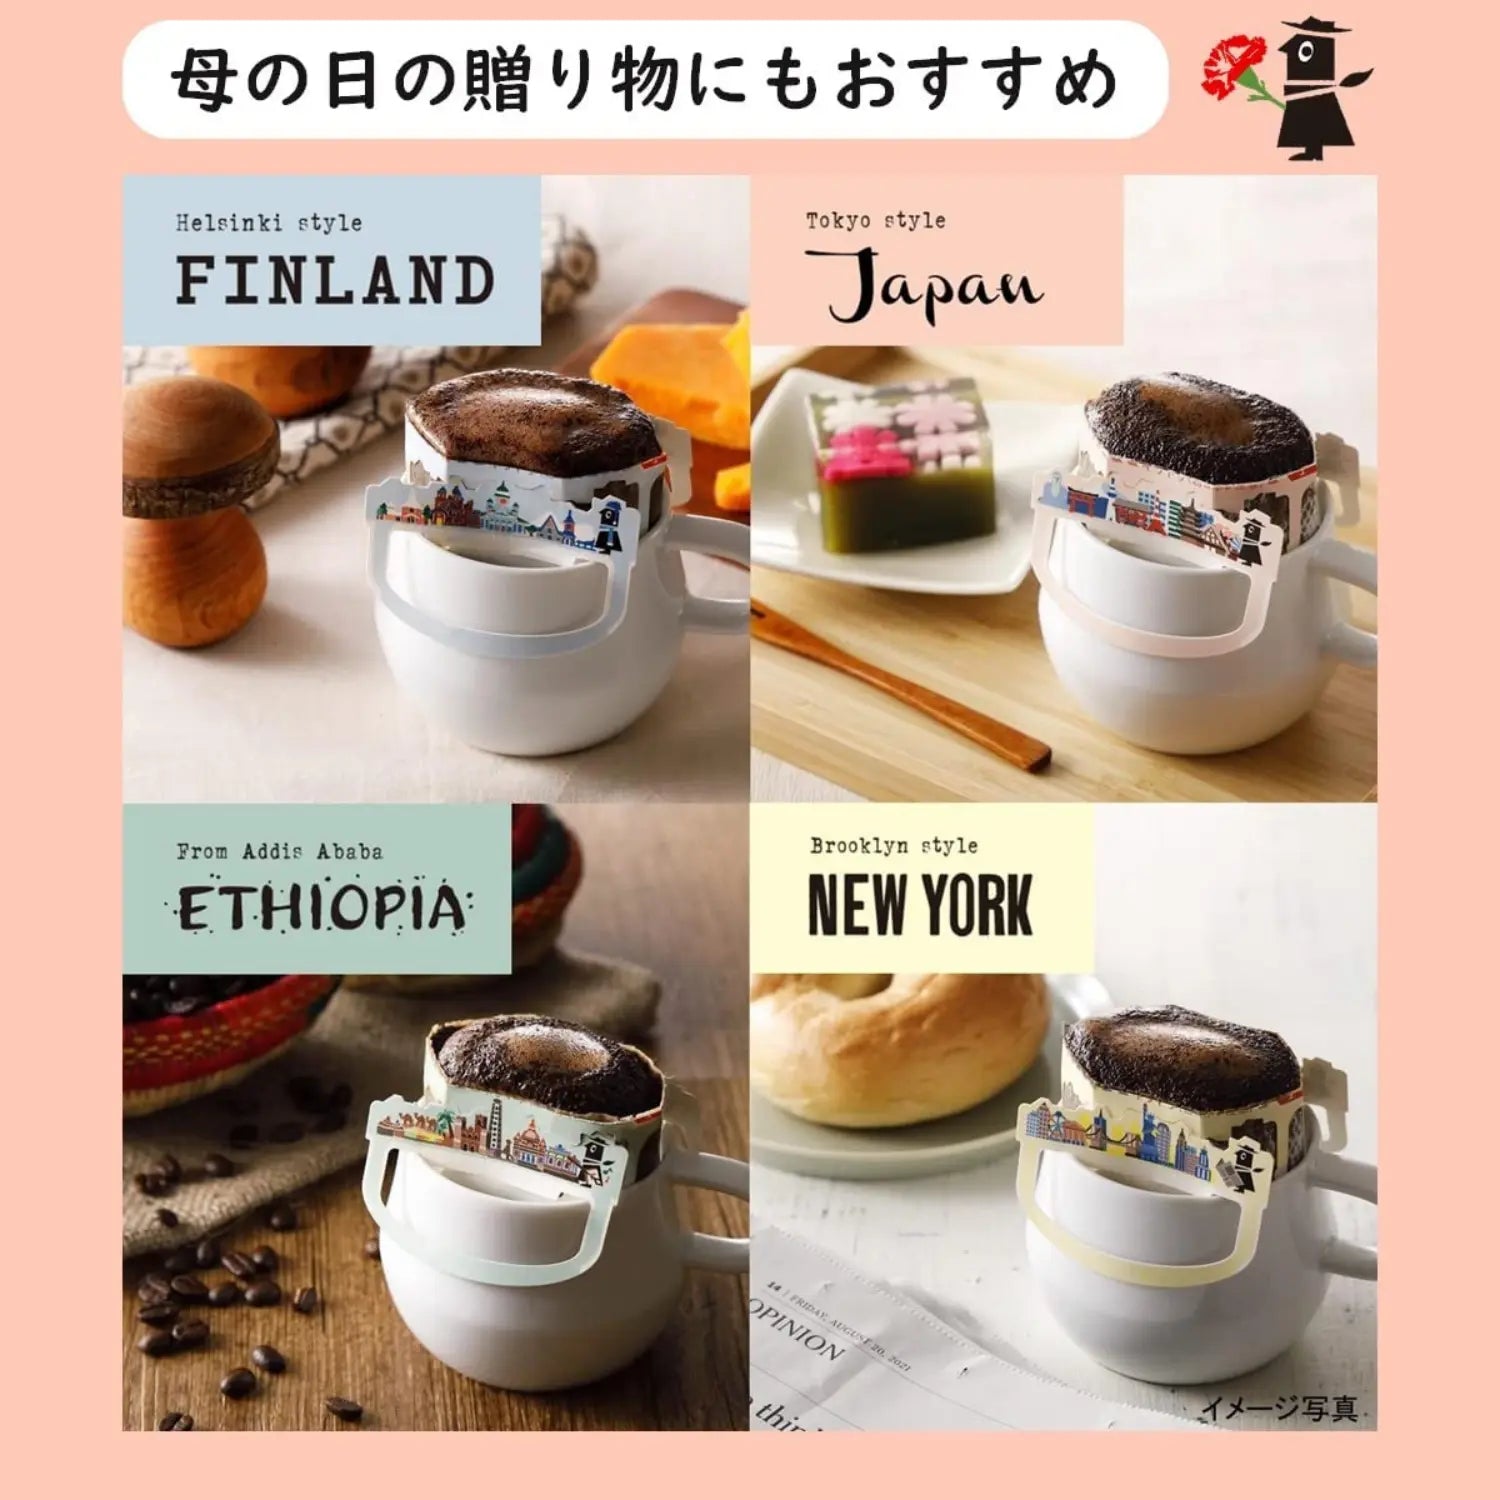 AGF Blendy World Drip Coffee Special Package (Pack of 20) - Buy Me Japan